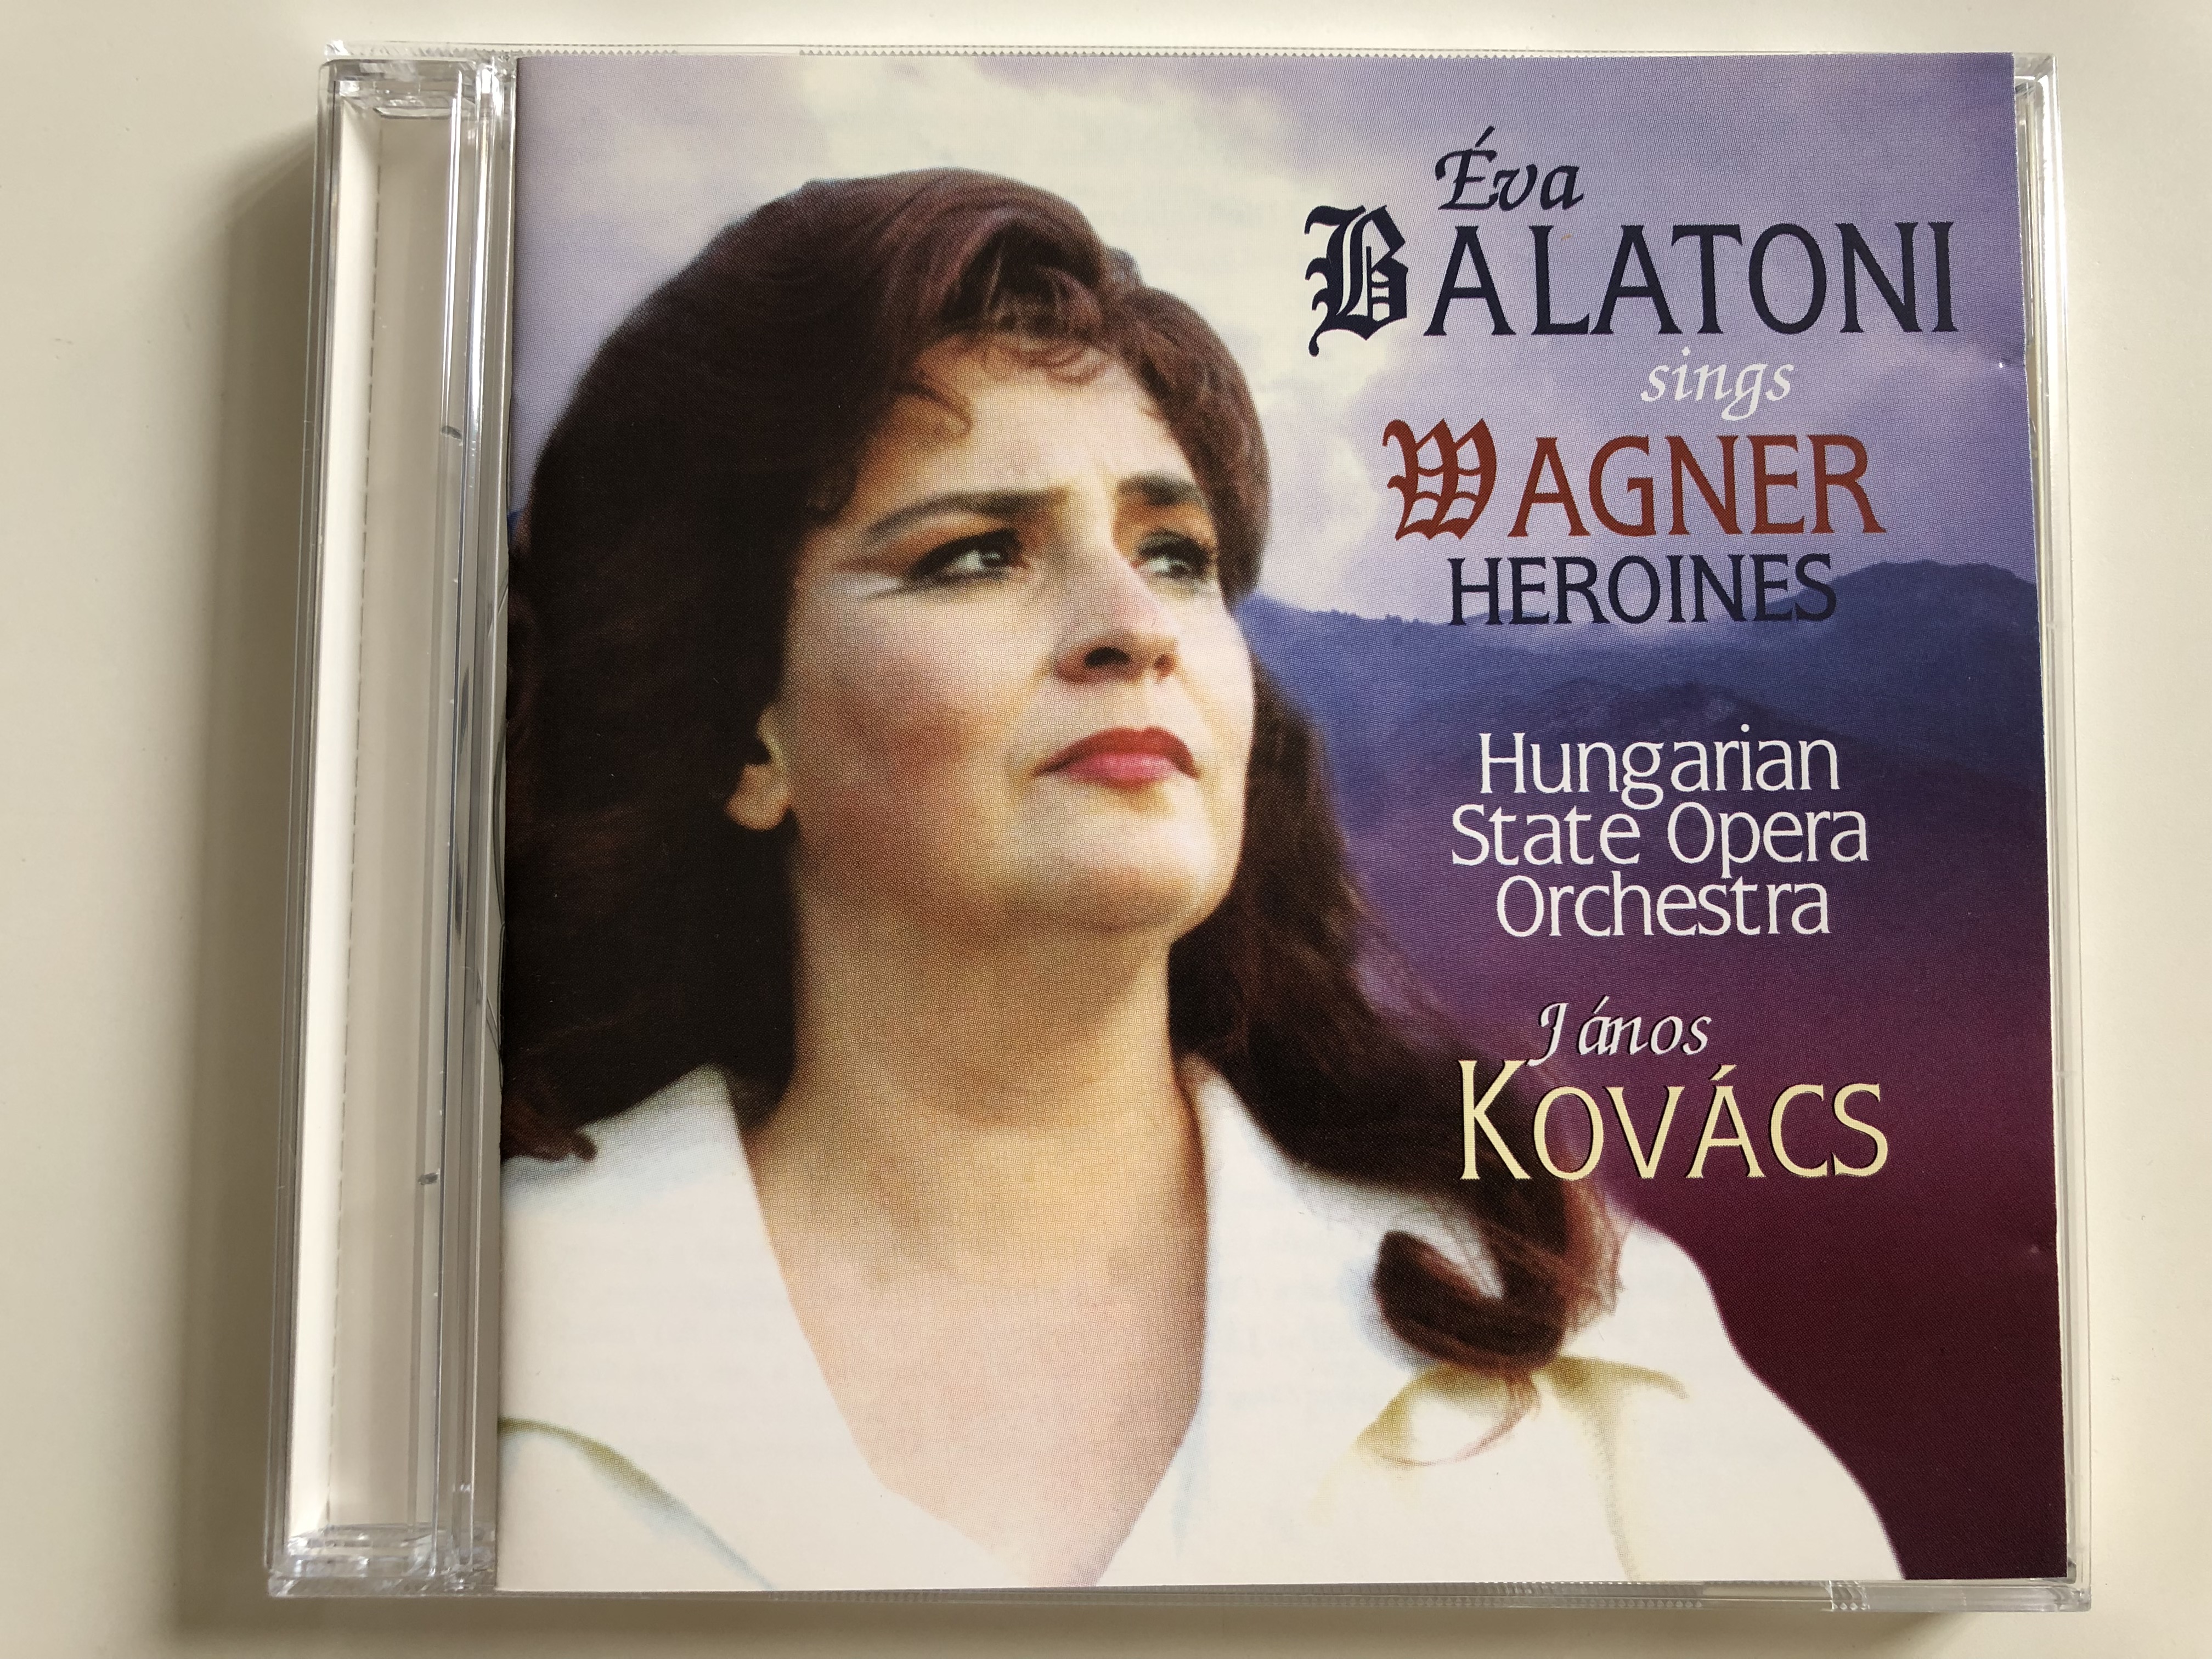 va-balatoni-sings-wagner-heroines-hungarian-state-opera-orchestra-conducted-by-j-nos-kov-cs-parsifal-alap-tv-ny-br-0229-audio-cd-2001-parsifal-foundation-2-.jpg